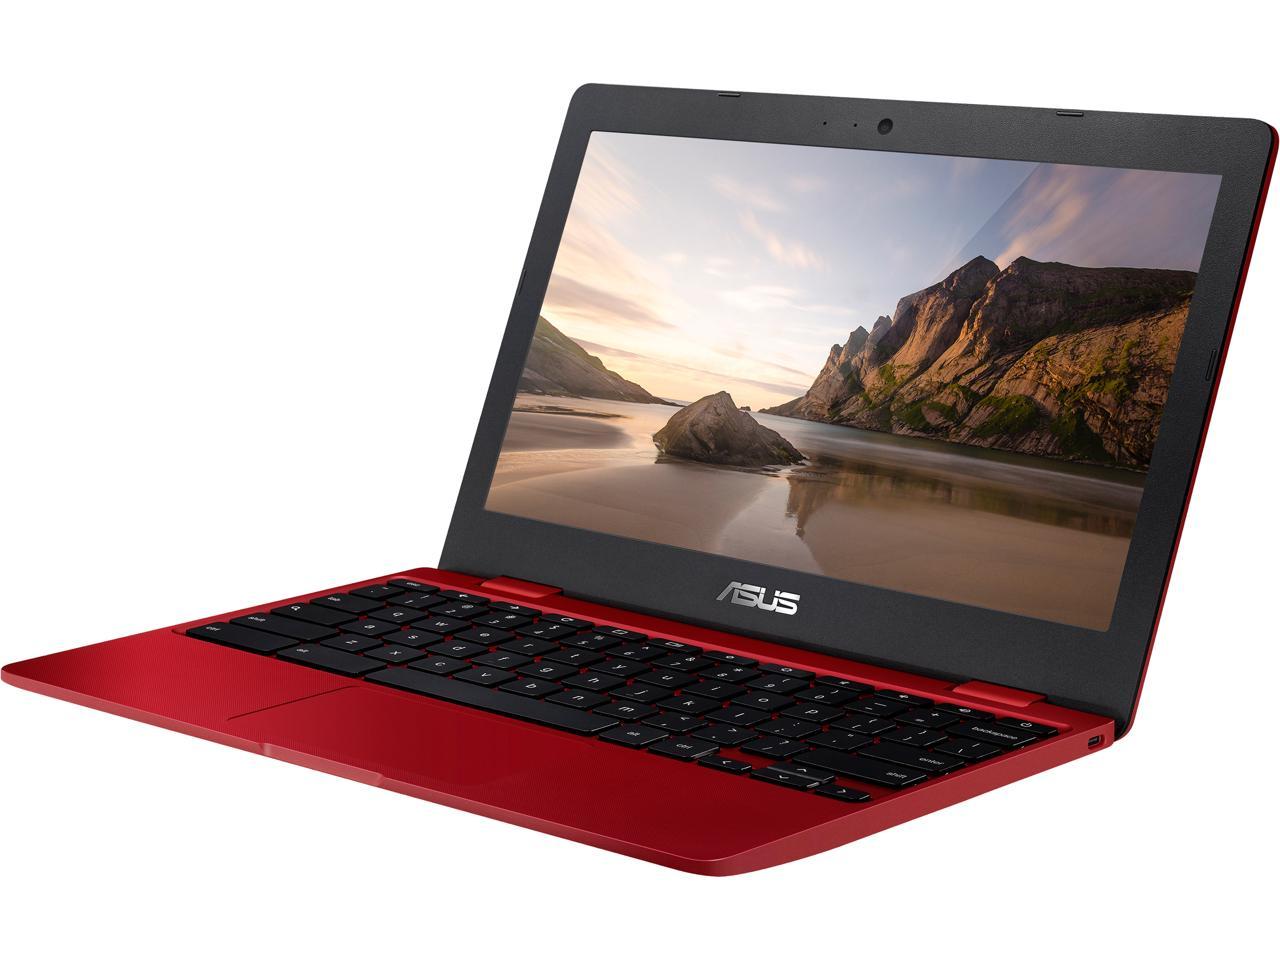 ASUS Chromebook Laptop in Red, 12, Intel Celeron, 32GB Flash Storage, 4GB RAM, C223NA-DH02-RD - image 3 of 17